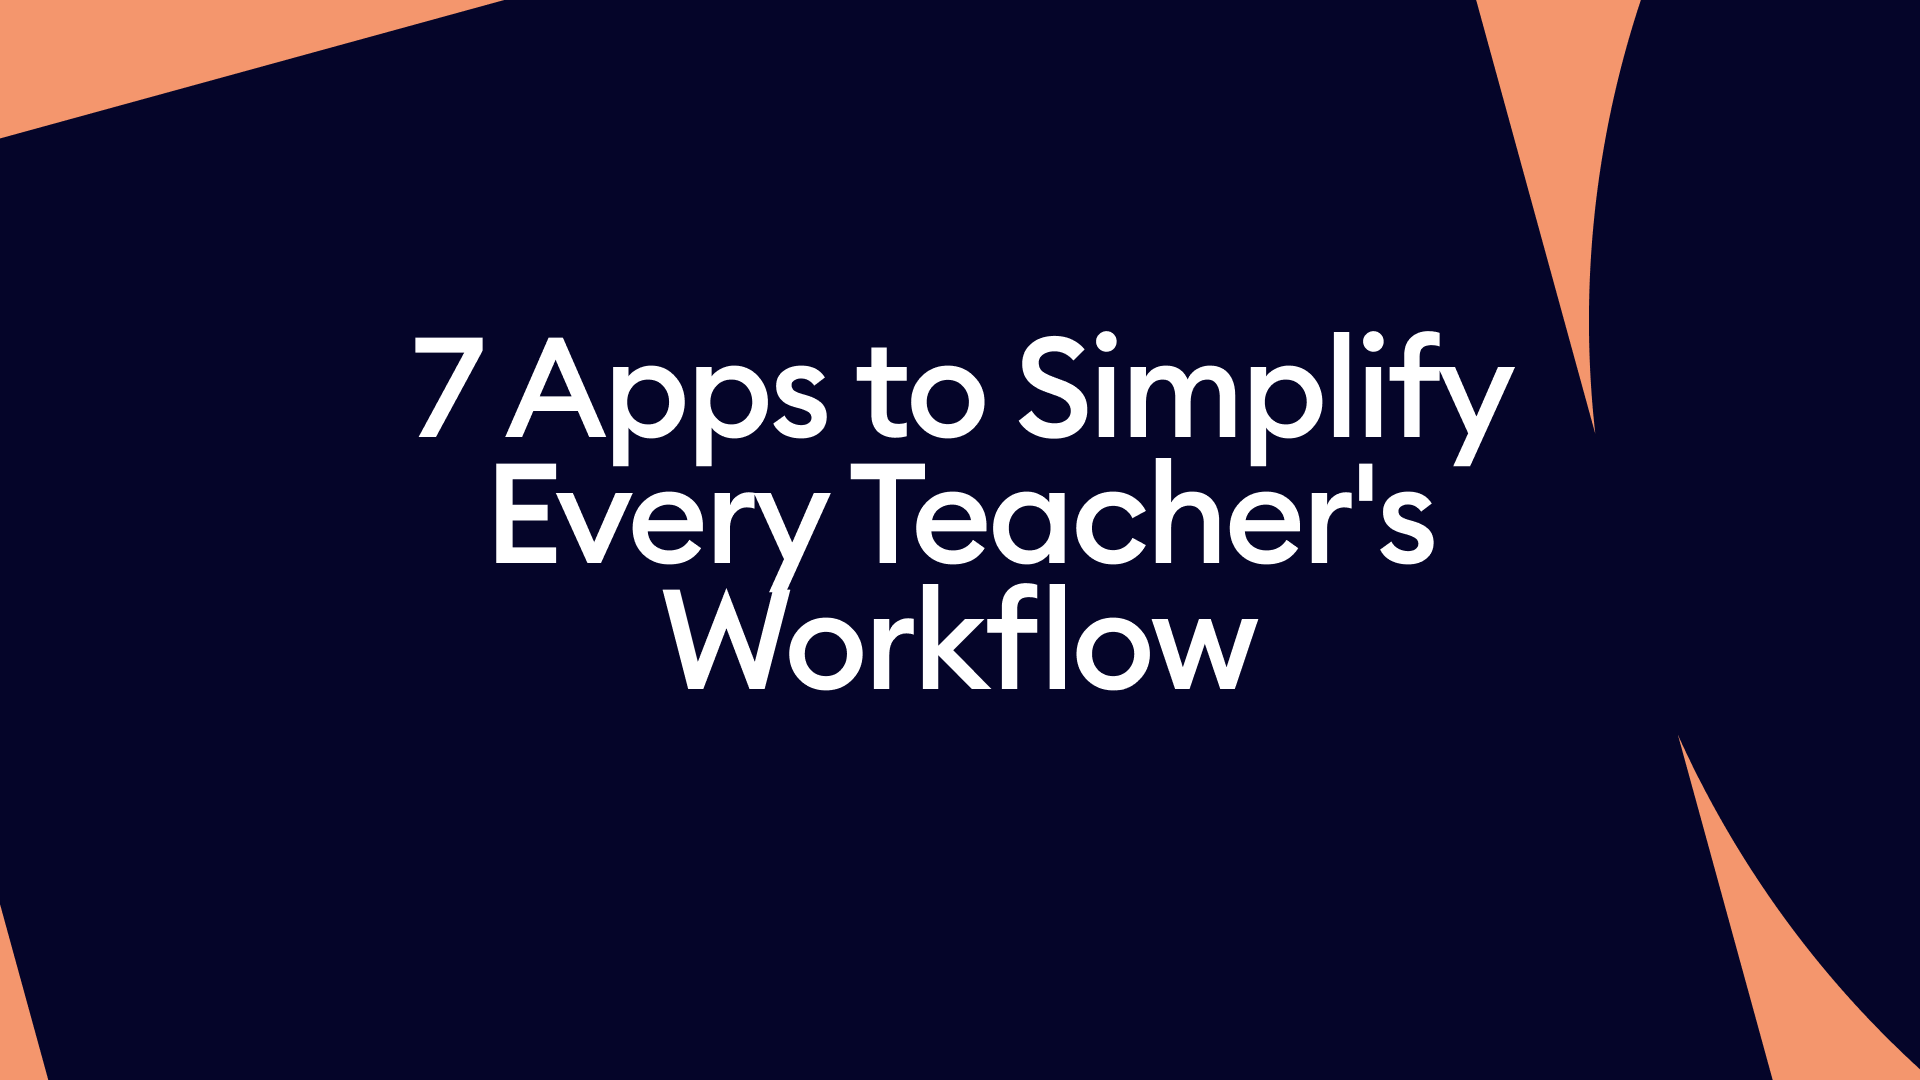 7 Apps to Simplify Every Teacher's Workflow